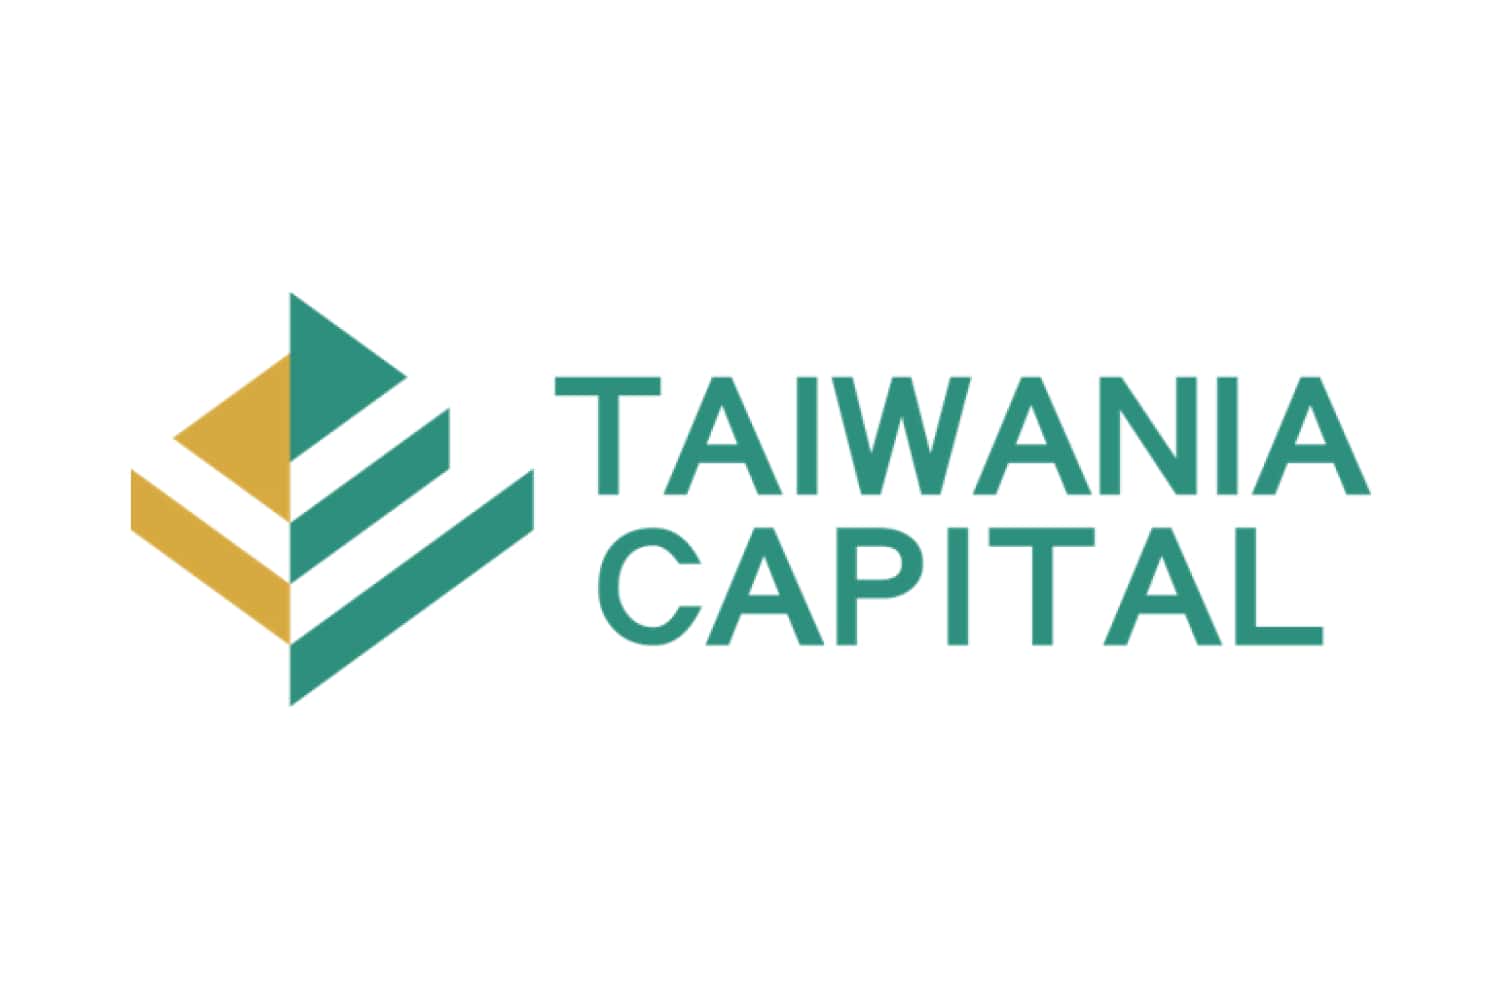 Taiwania Capital logo